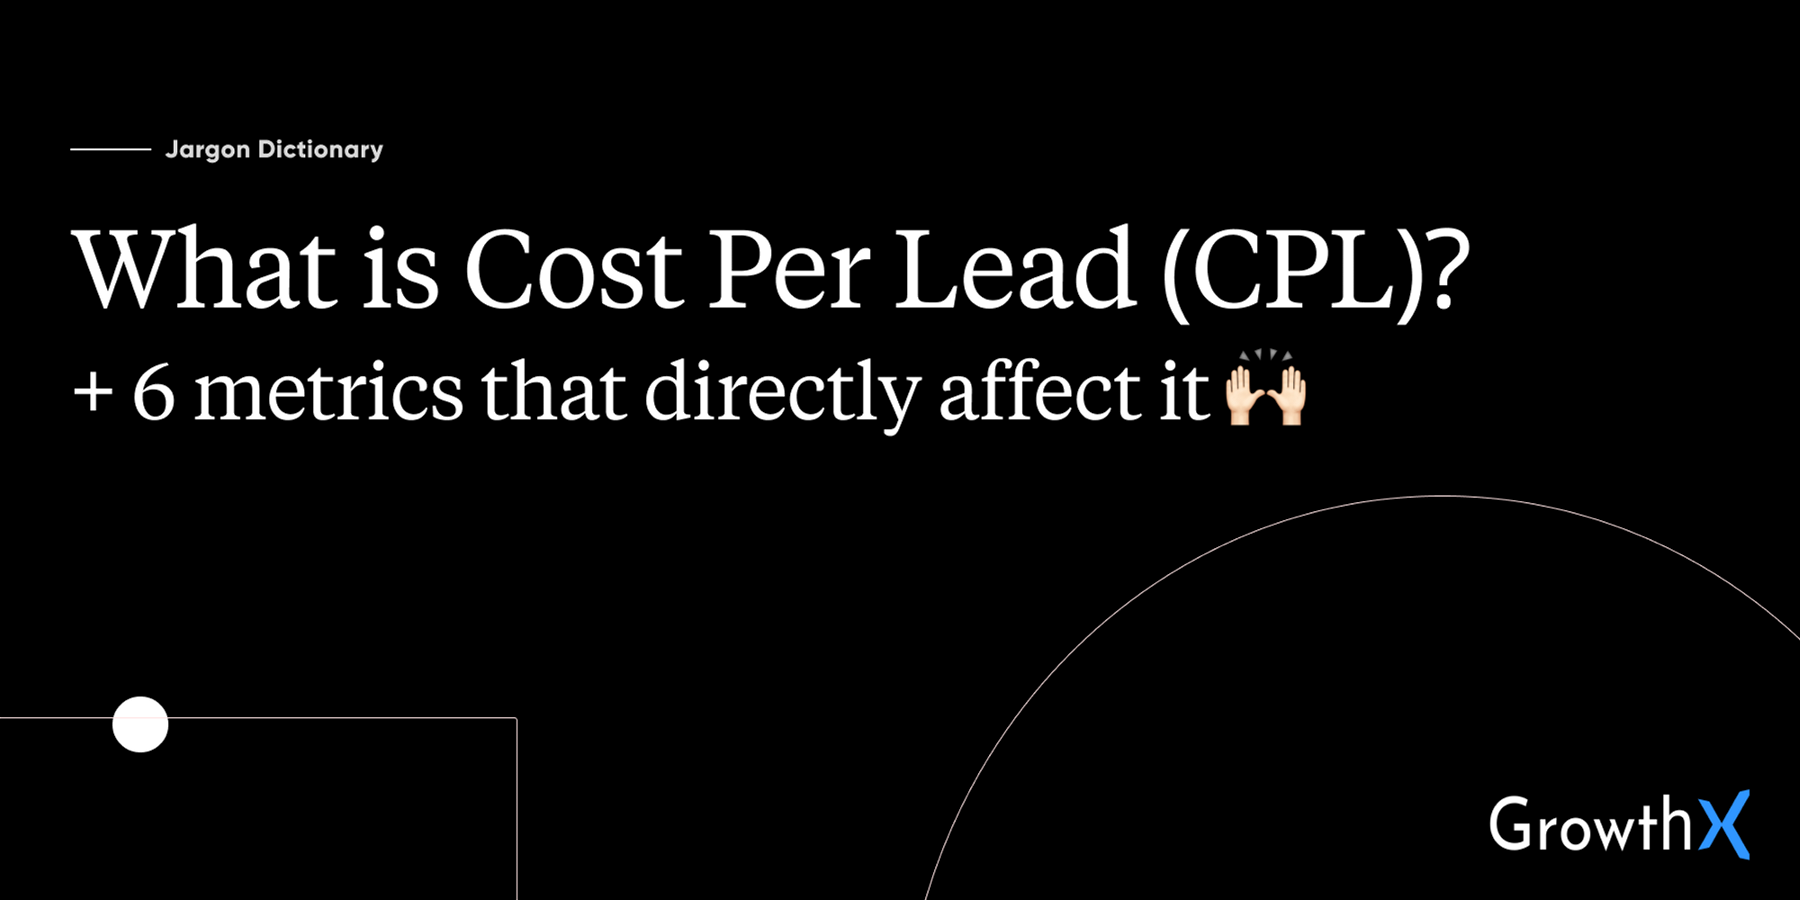 What is Cost Per Lead? (+ metrics that affect cost per lead)